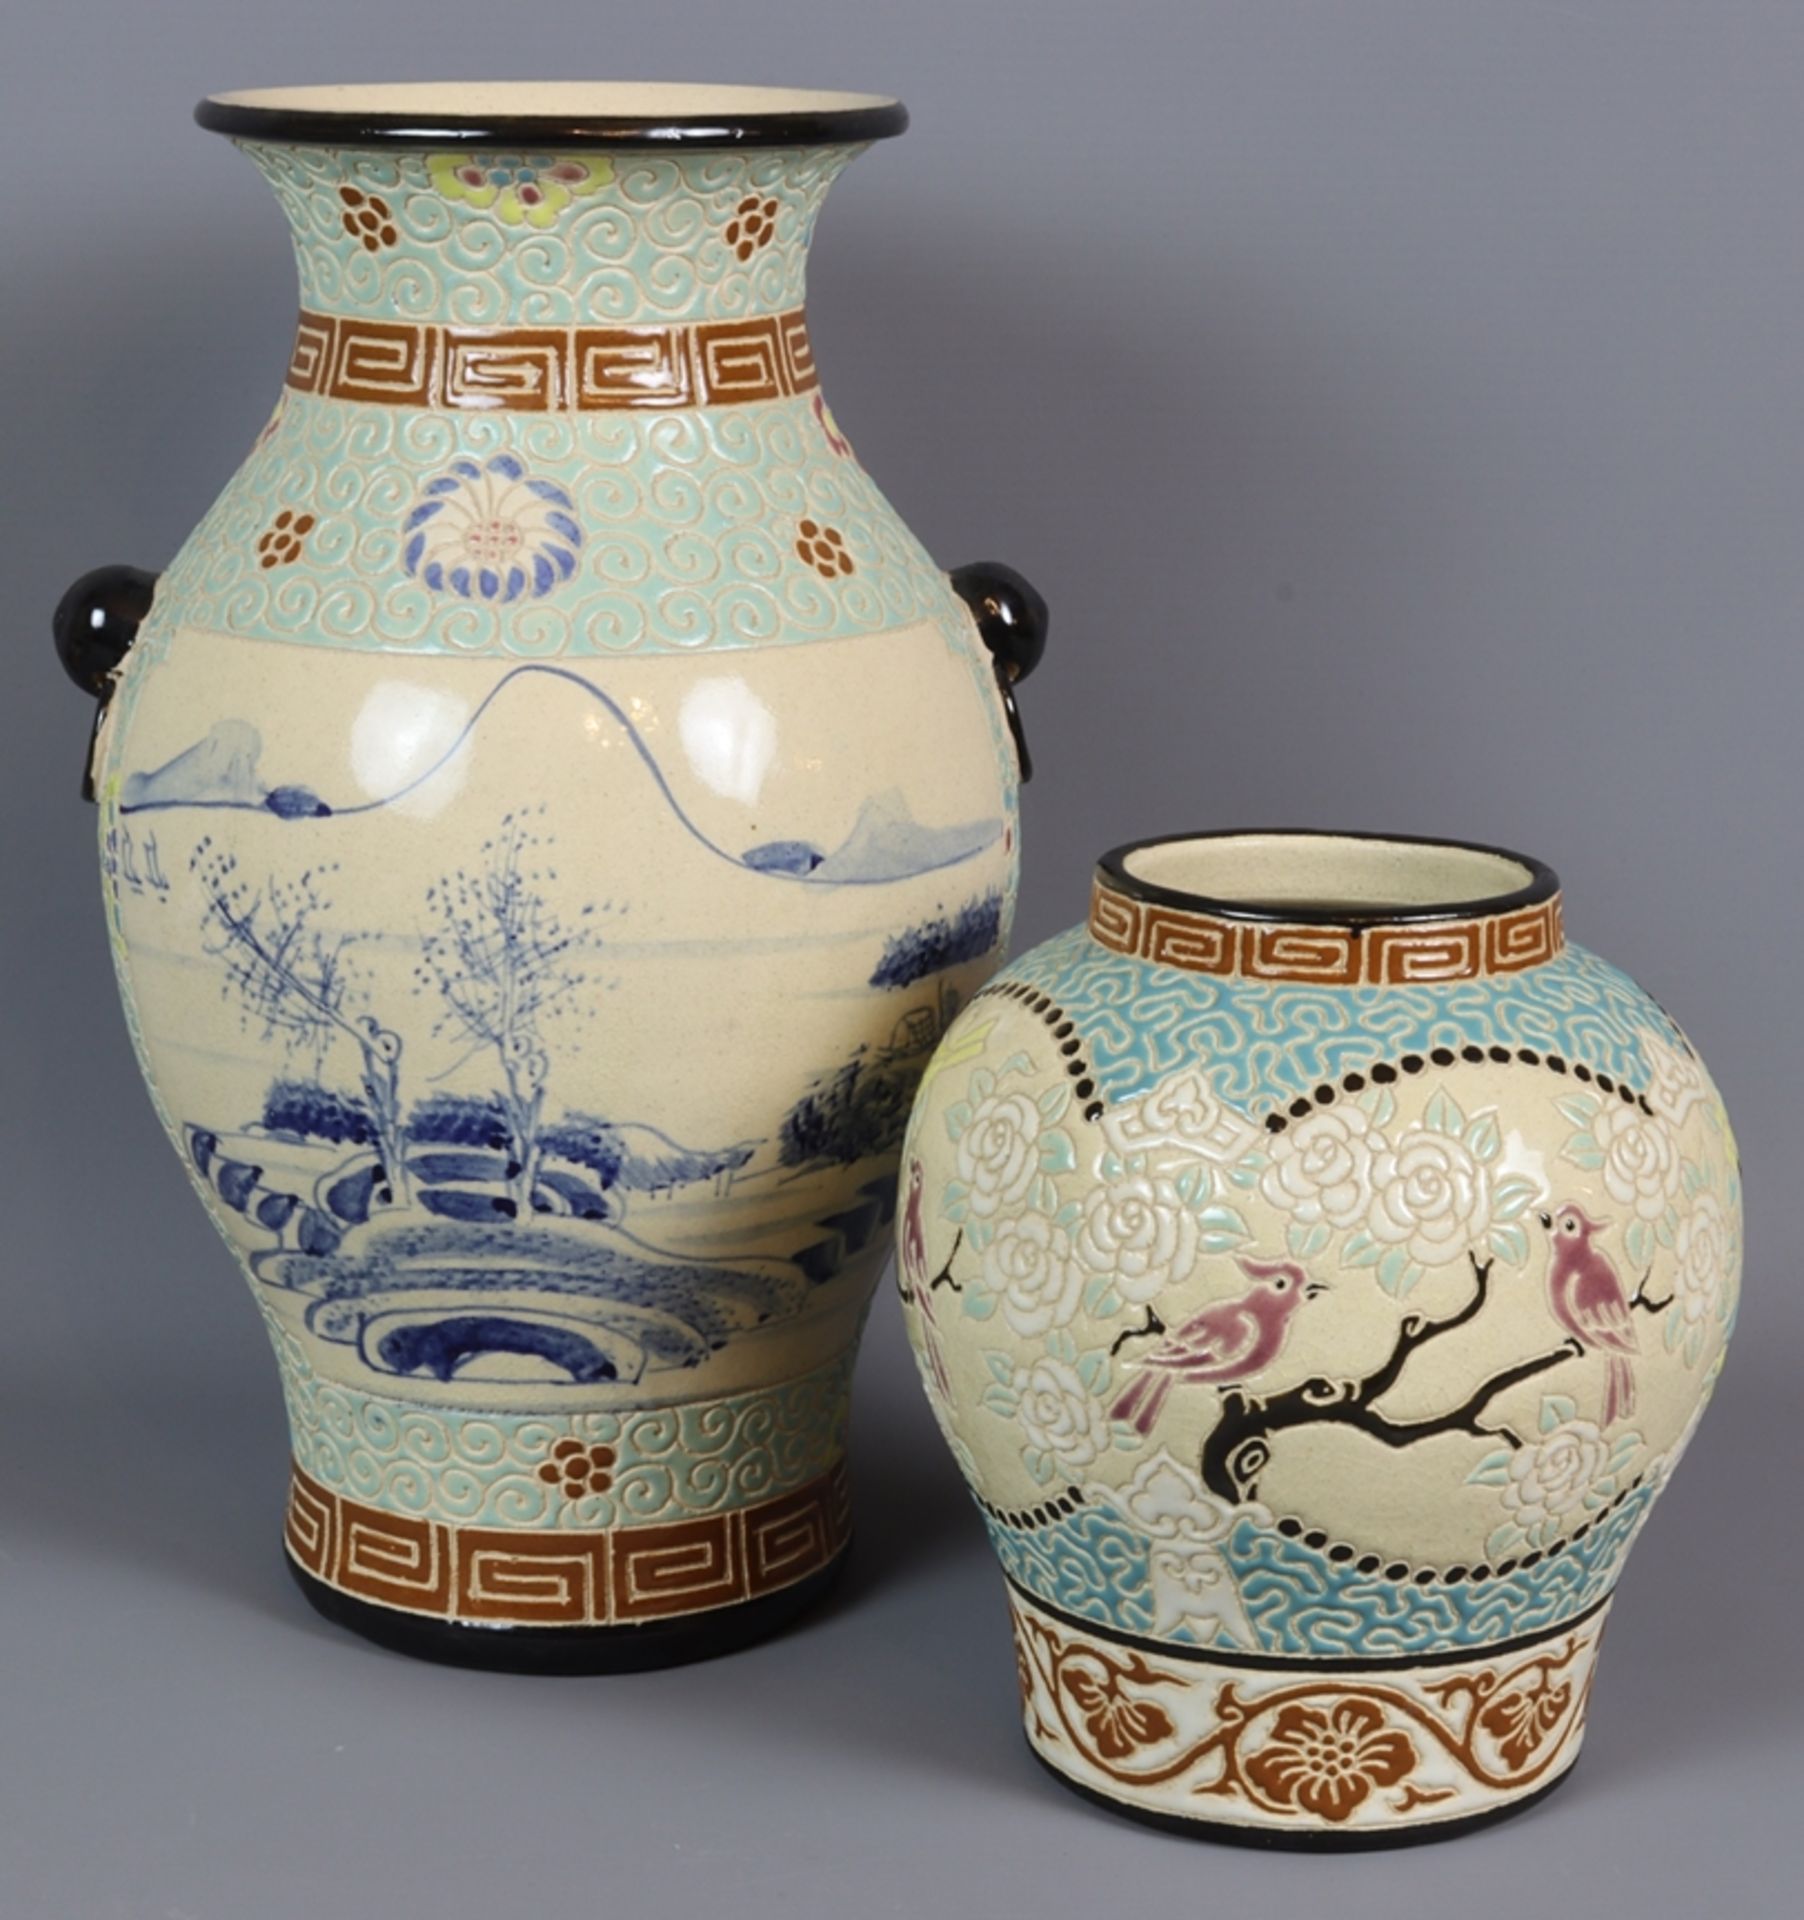 Two Vietnamese ceramic vases, Vietnam of the 70s